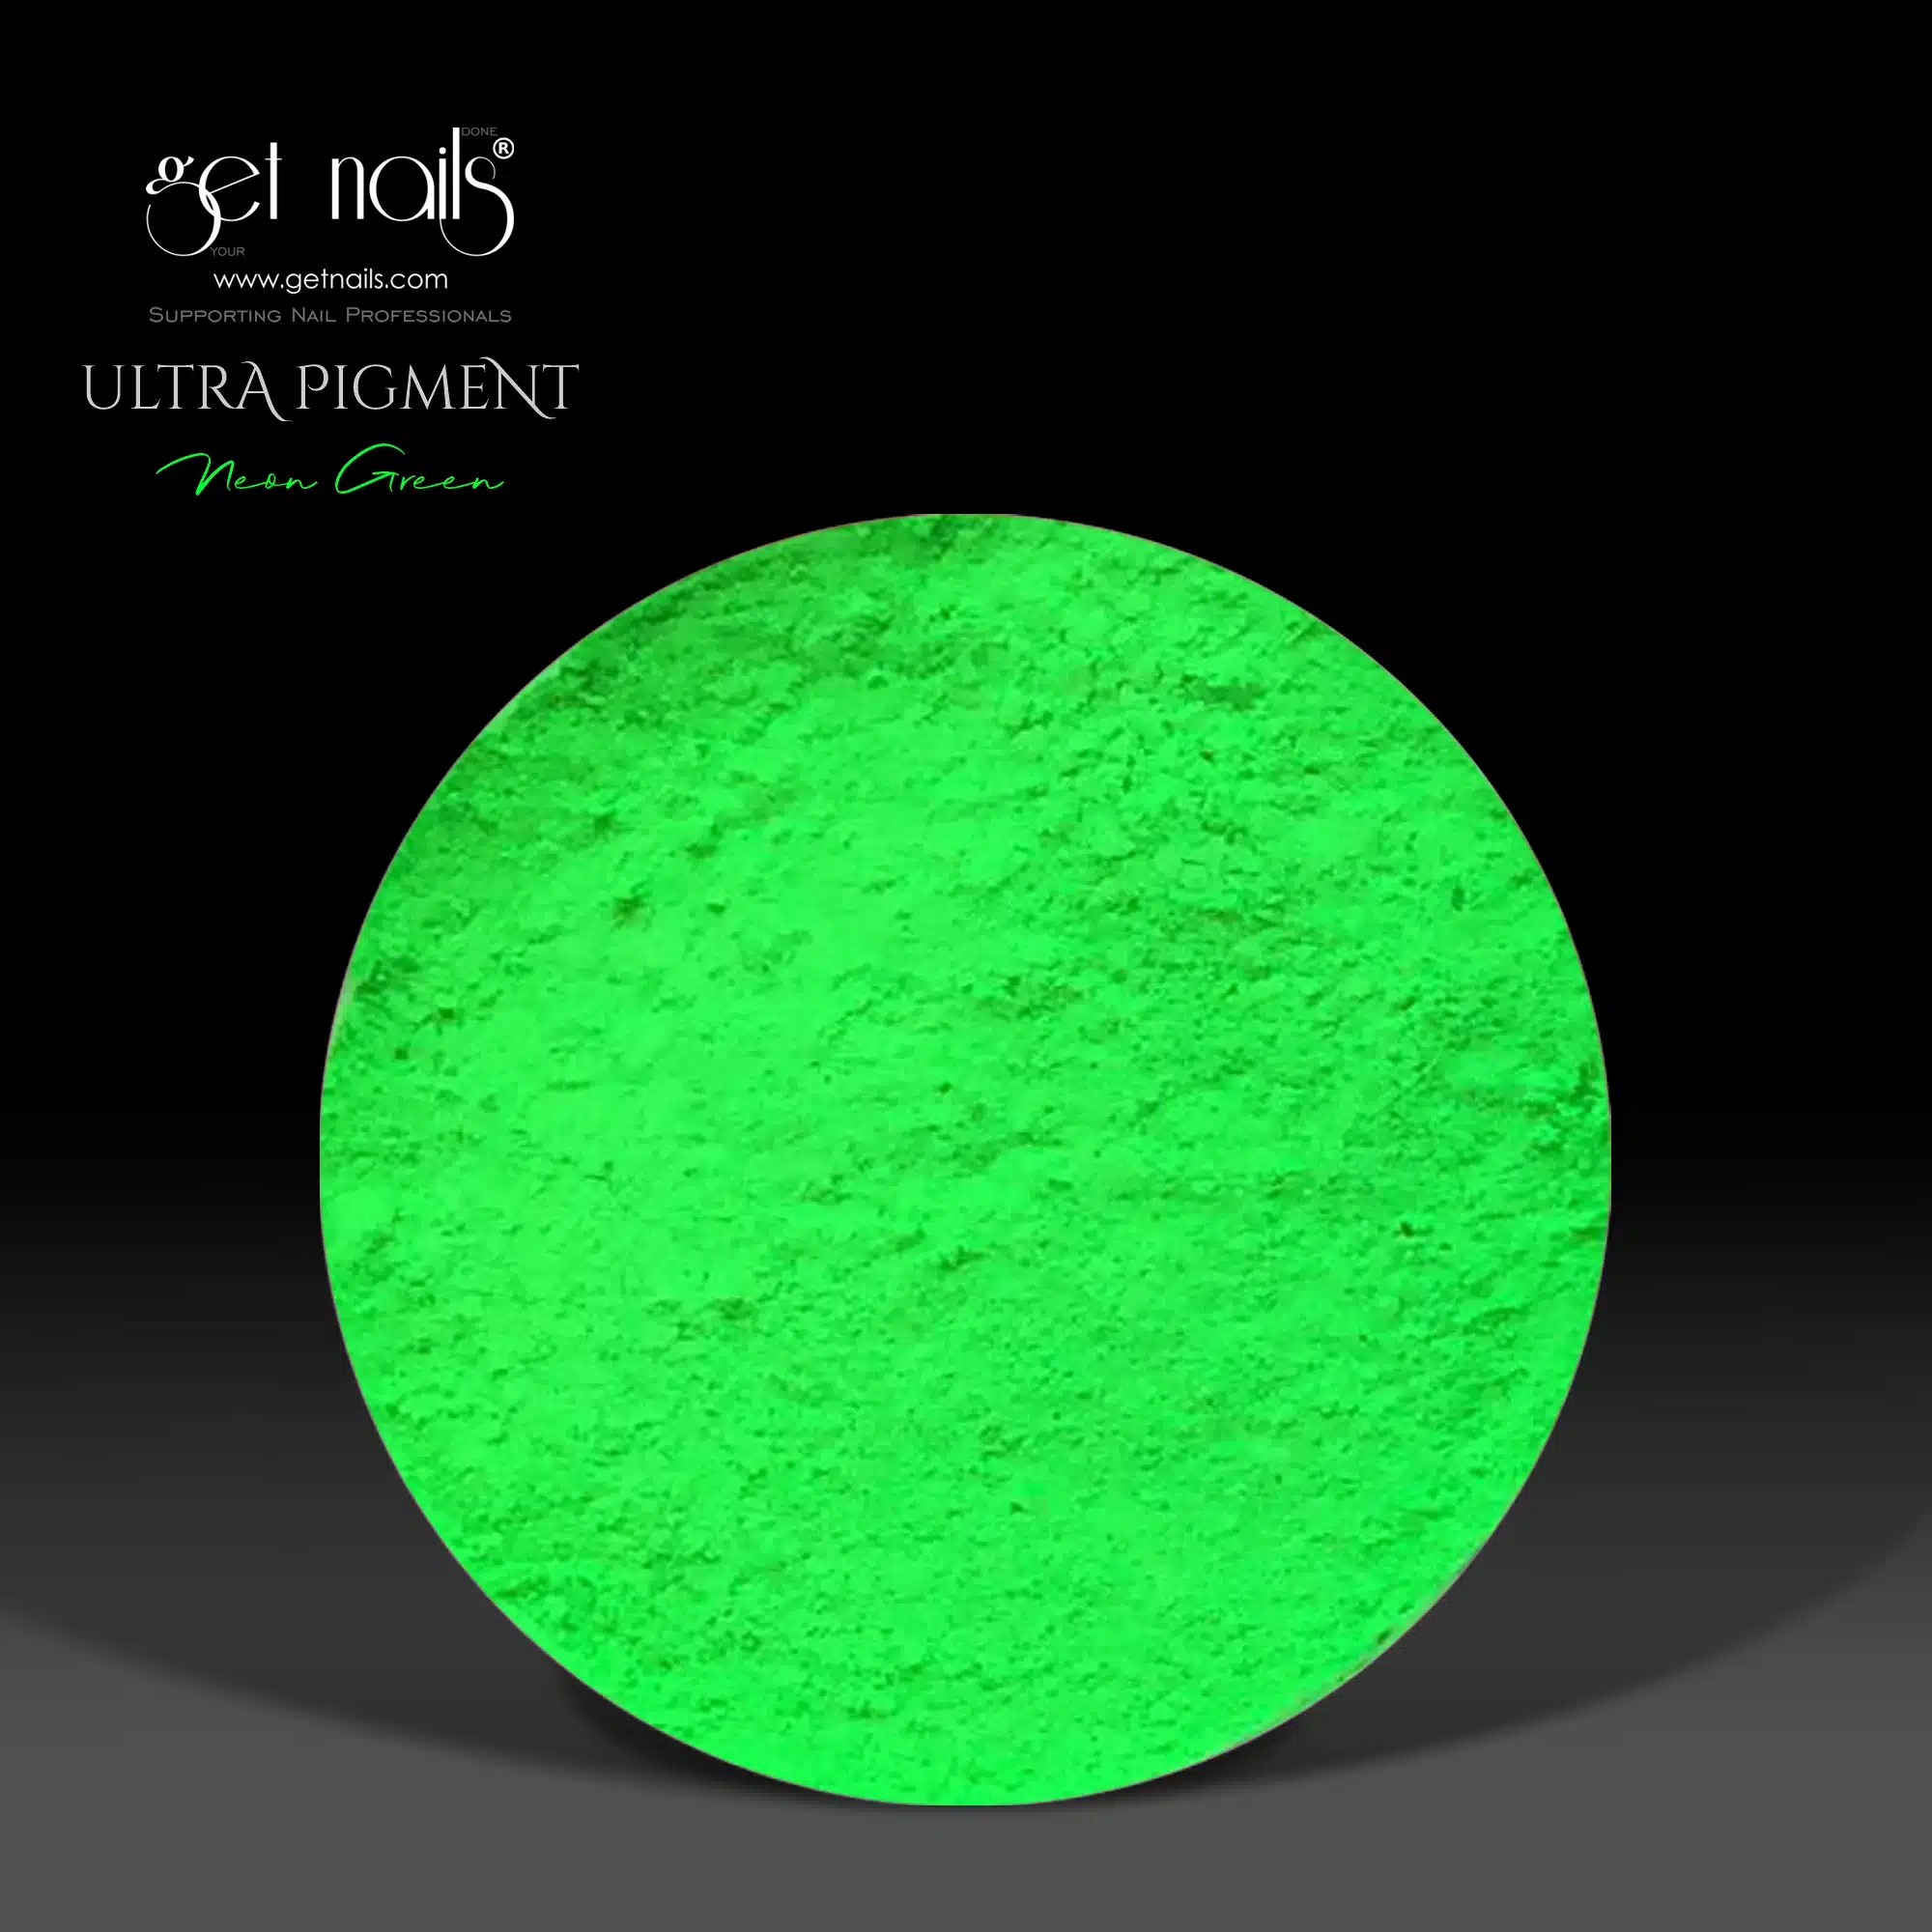 Get Nails Austria - Ultra Pigment Neon Green 1.5 g